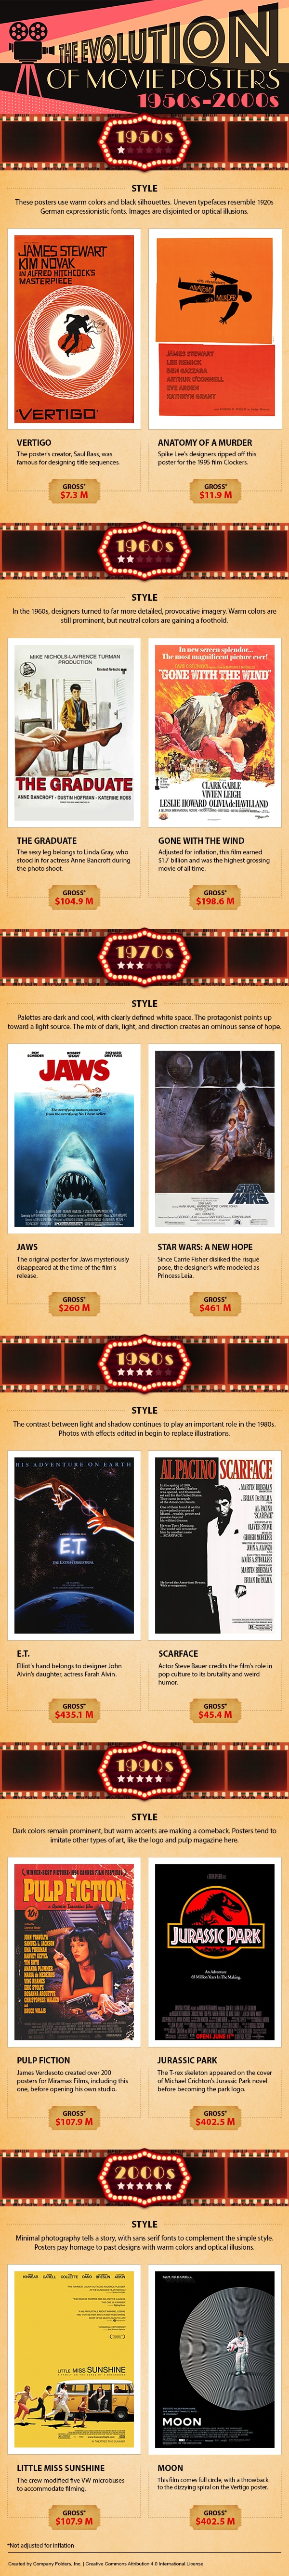 Evolution Movie Poster Design Infographic